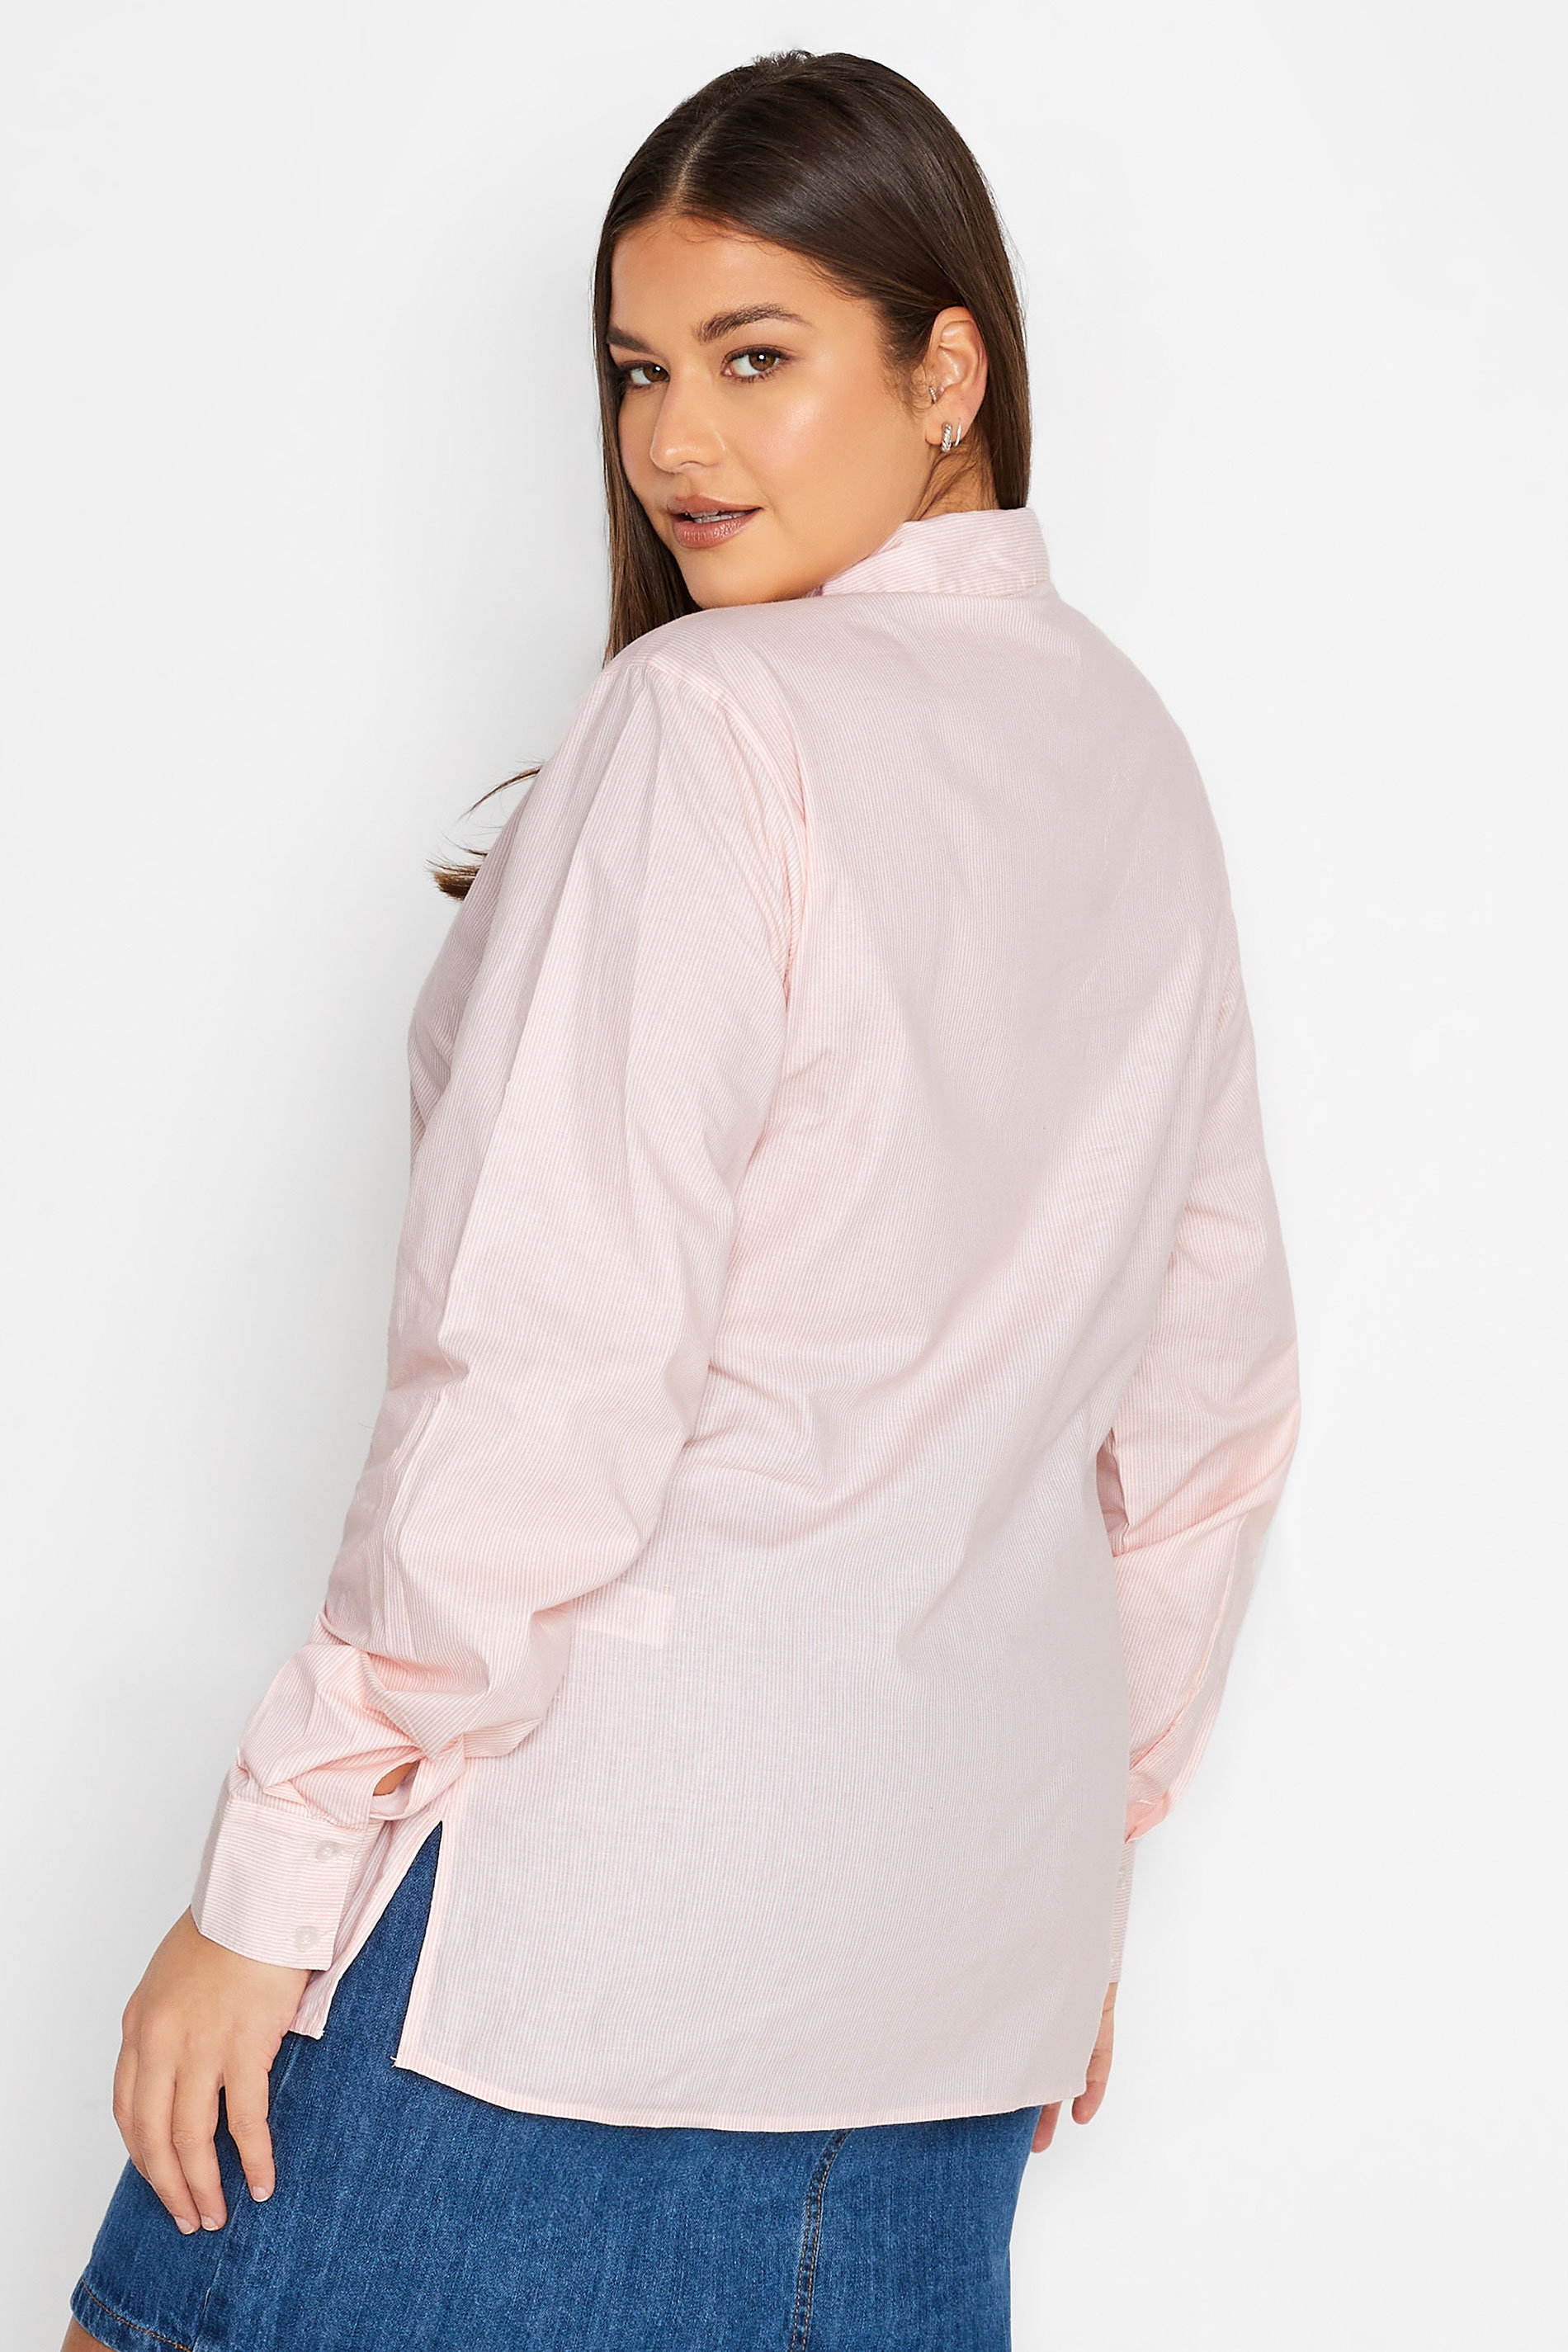 LTS Tall Women's Pink Stripe Fitted Shirt | Long Tall Sally 3